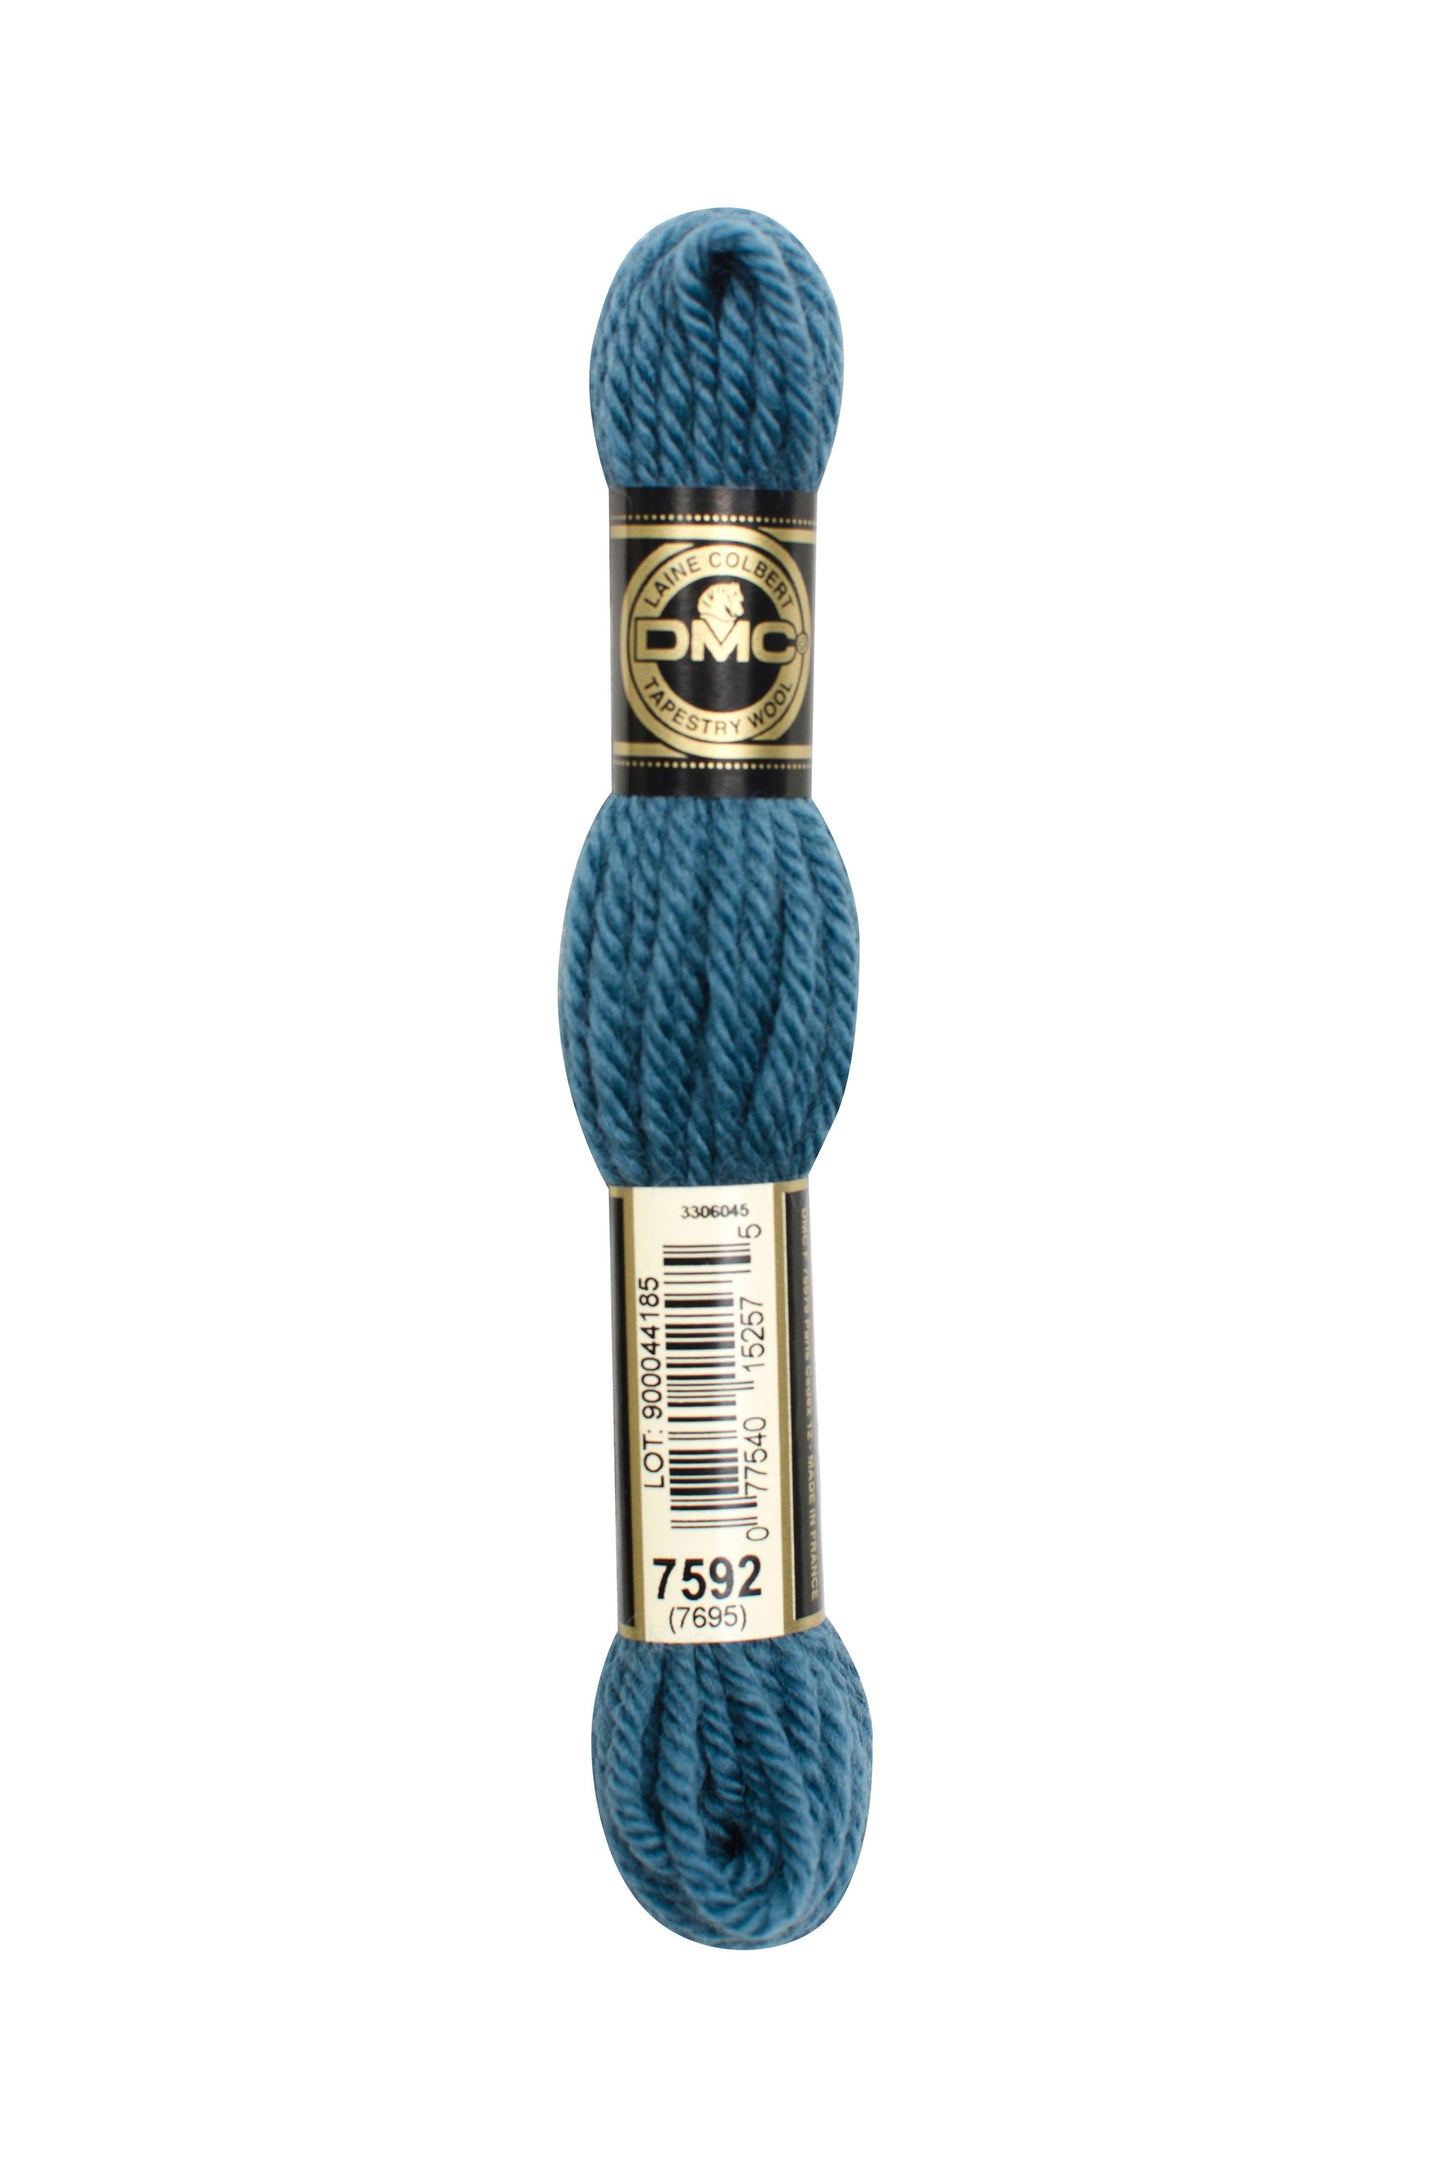 DMC Tapestry Wool | 7404 - 7604